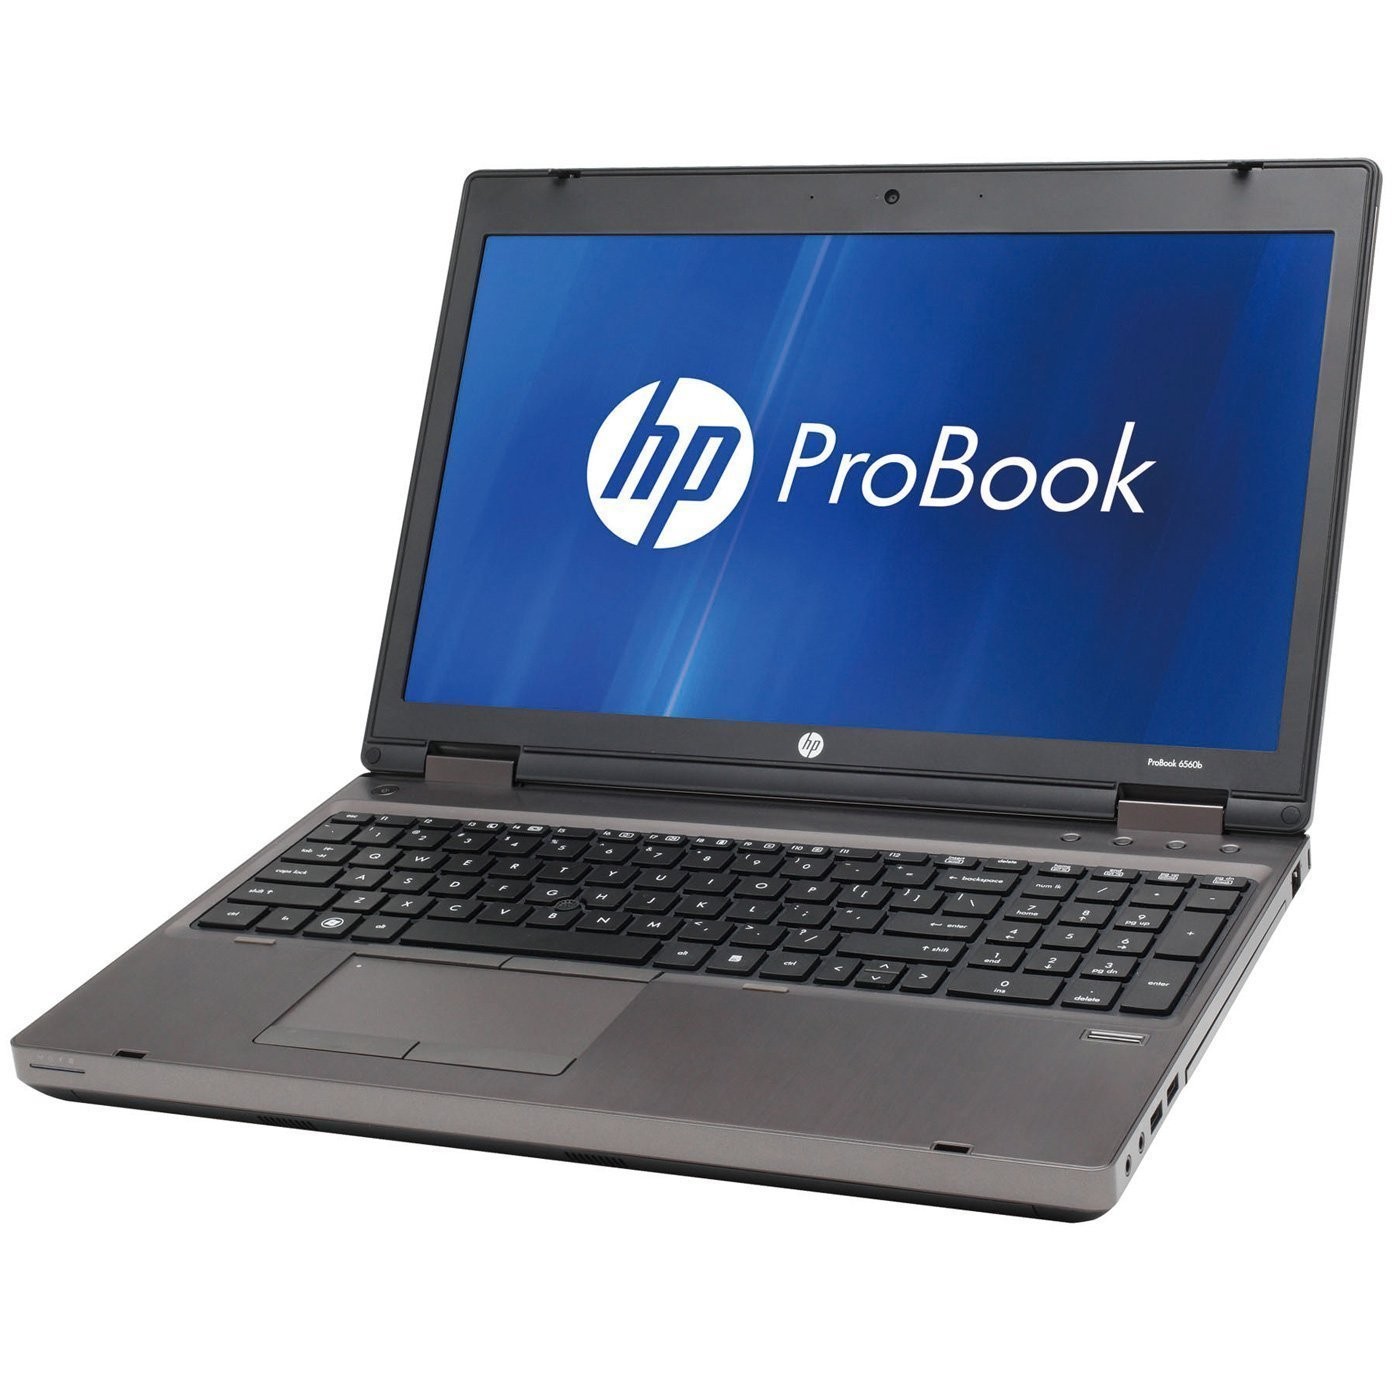 HP-PB-6360b-i3-HP ProBook 6360b 13.3" Intel Core i3 4 GB RAM 320 GB HDD Windows 10 Pro Laptop WiFi-image